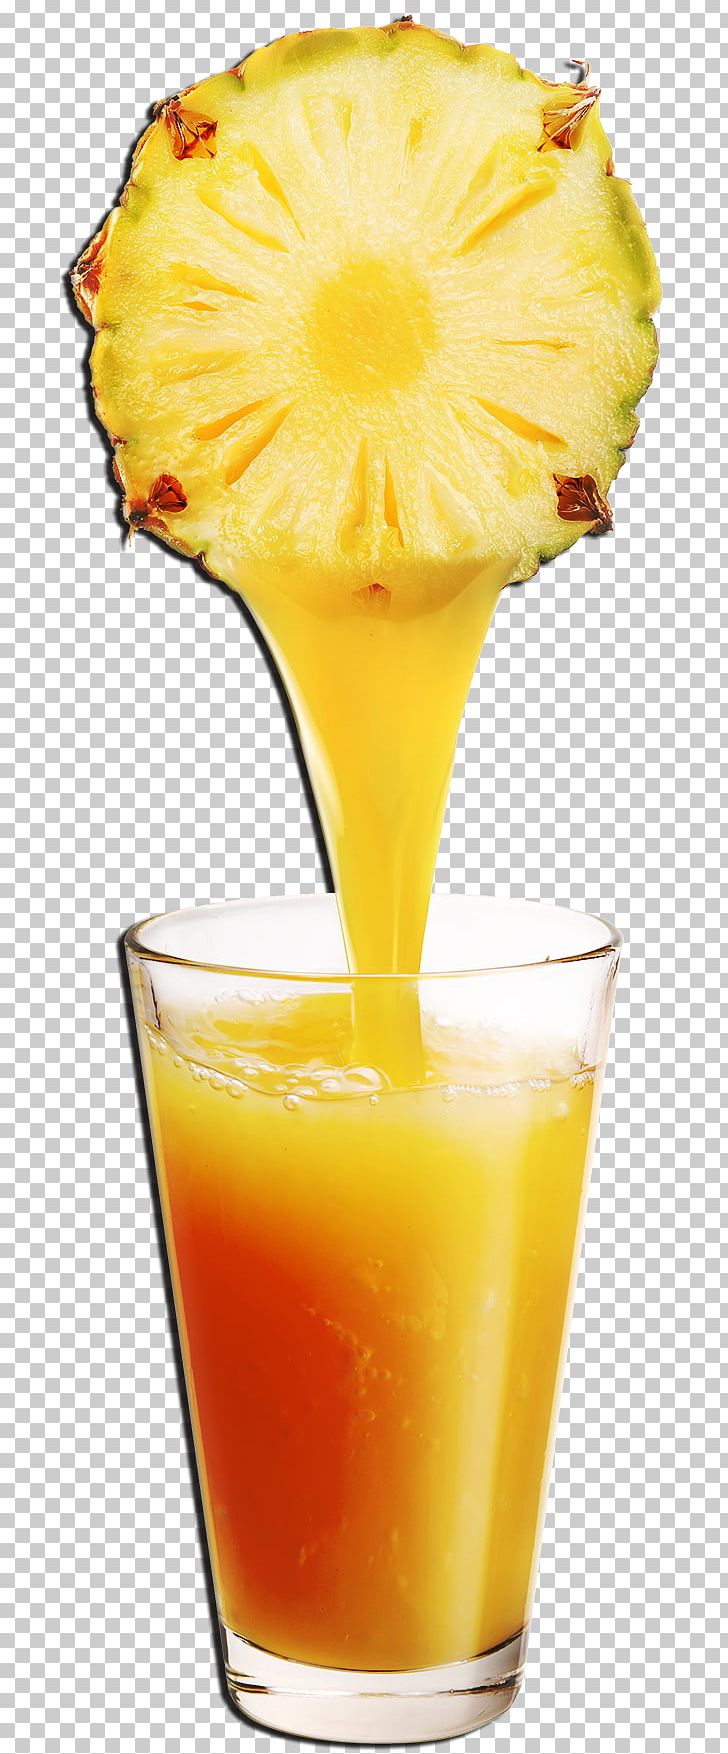 Orange Juice Raw Foodism Vegetable Fruit PNG, Clipart, Carrot, Cartoon Pineapple, Cocktail, Cocktail Garnish, Eating Free PNG Download